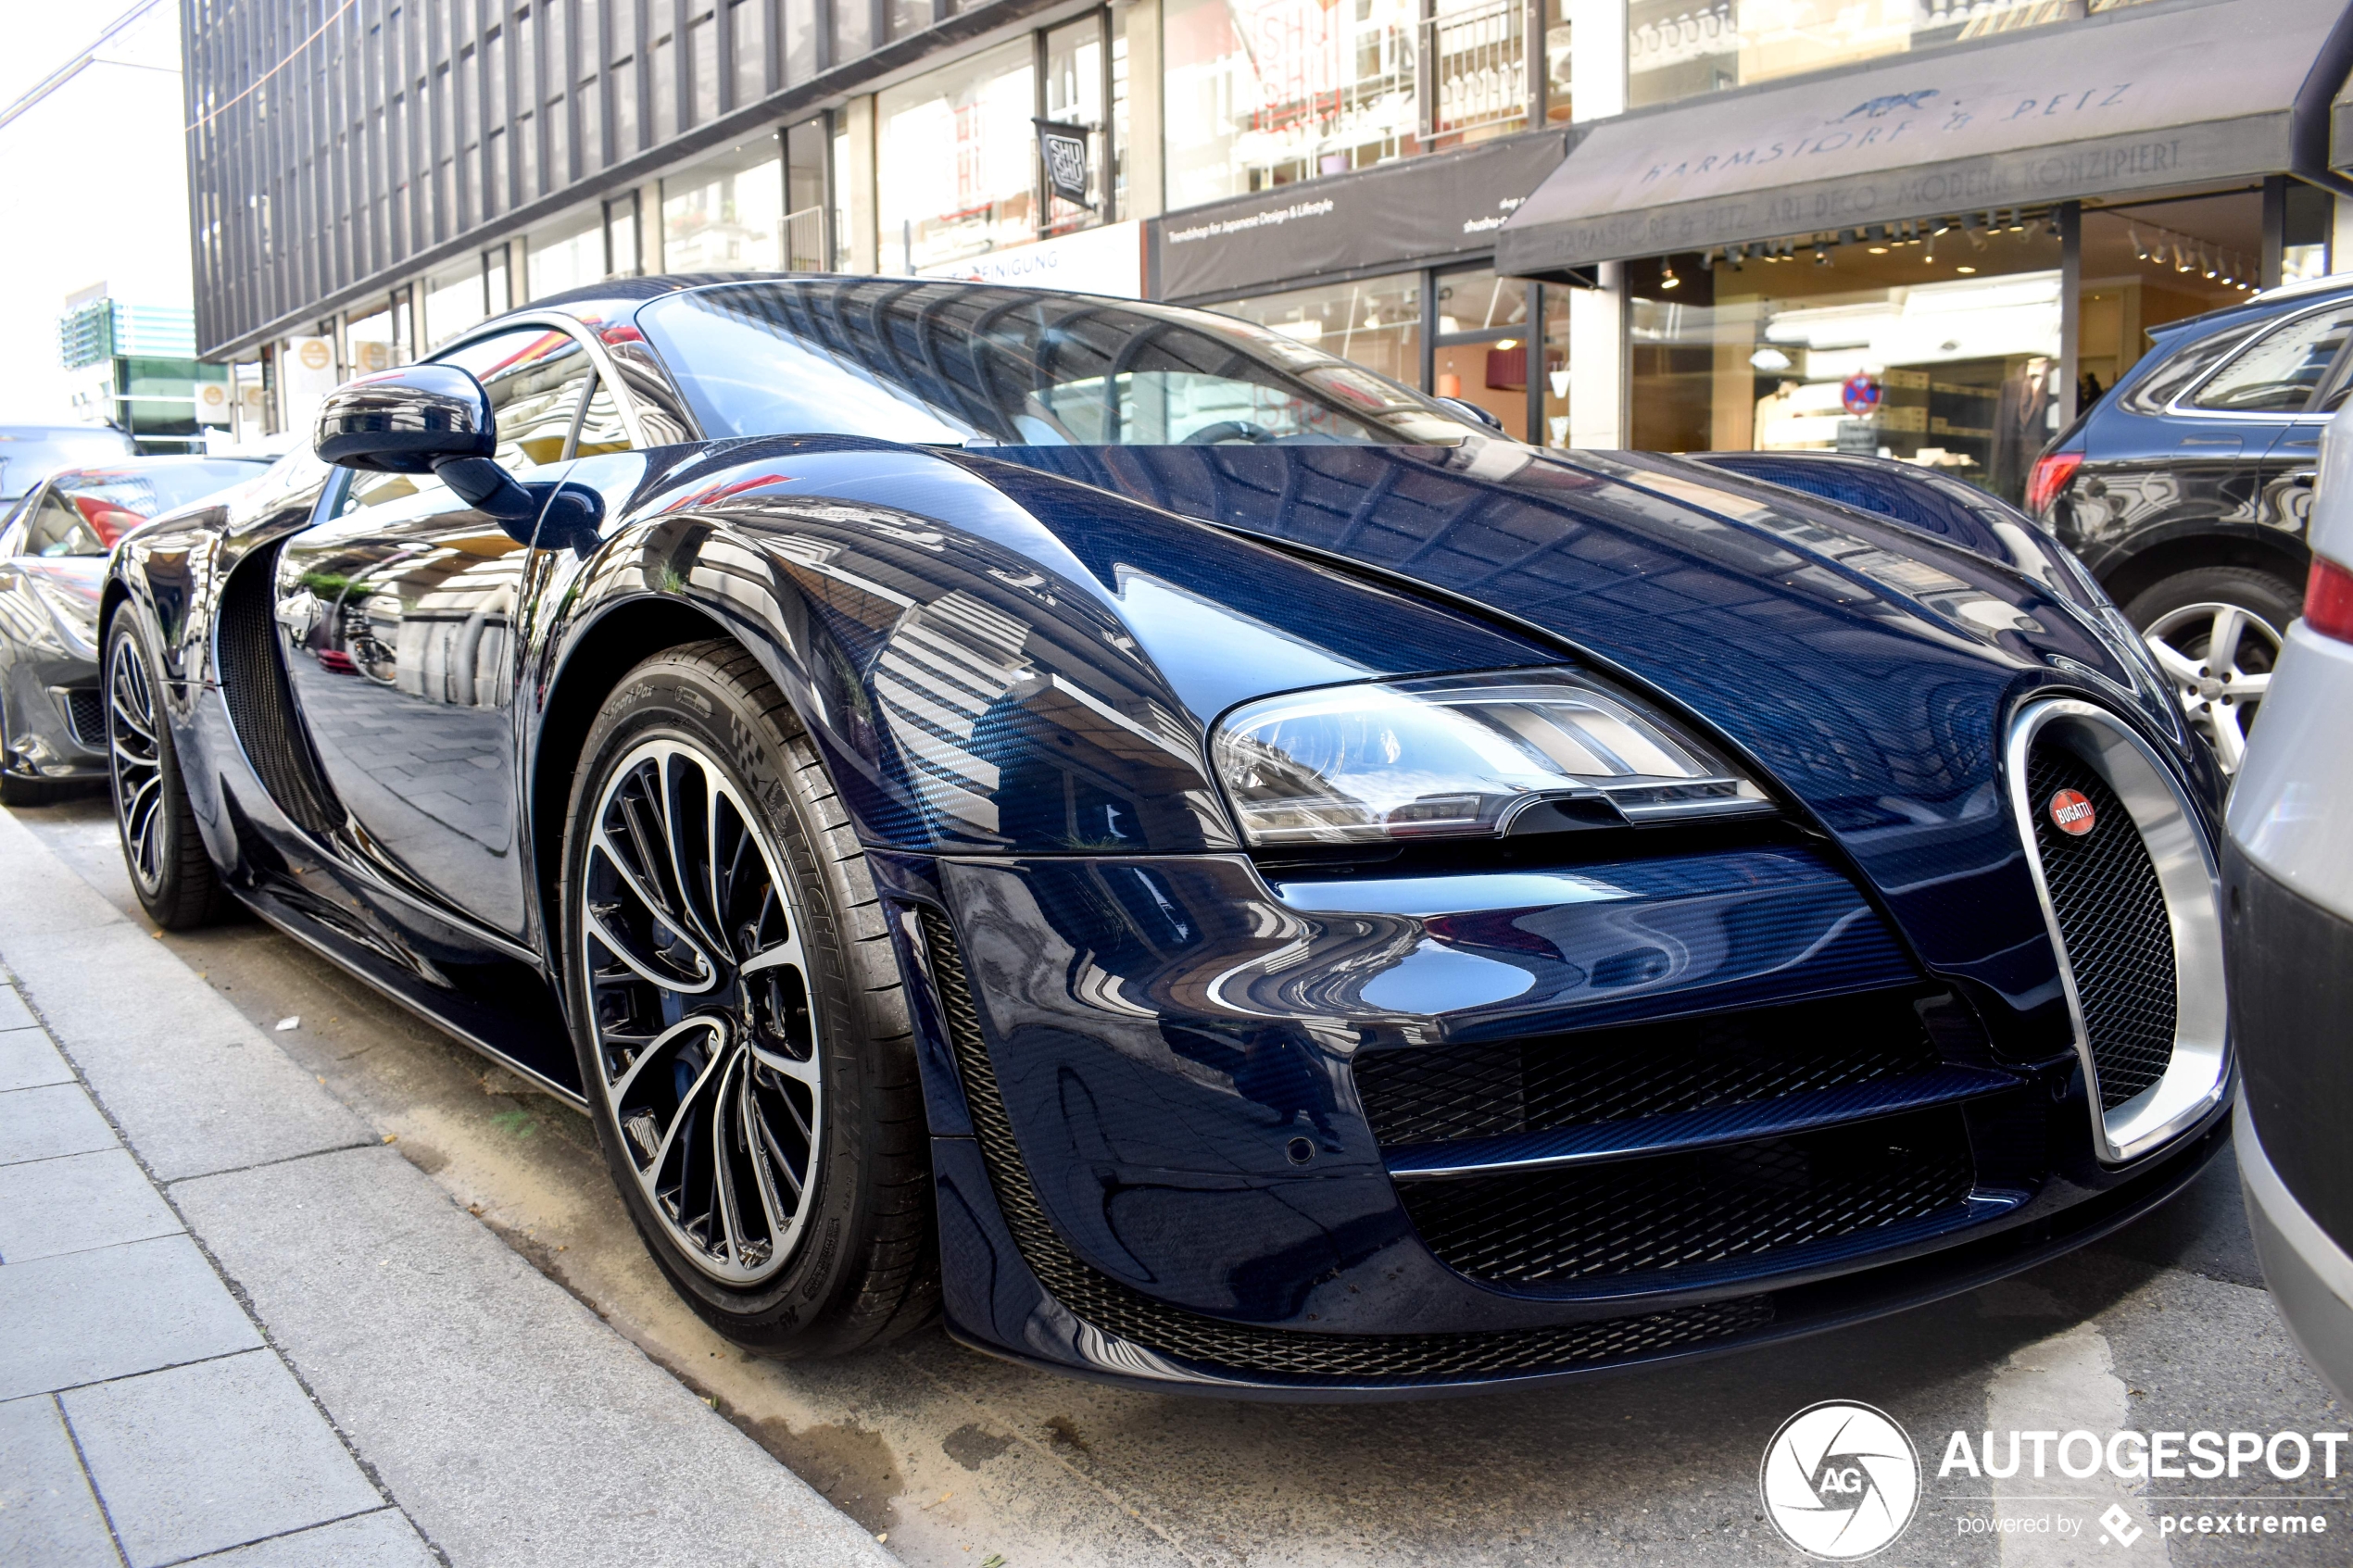 Bugatti Veyron 16.4 Super Sport draagt carbon fiber body met trots